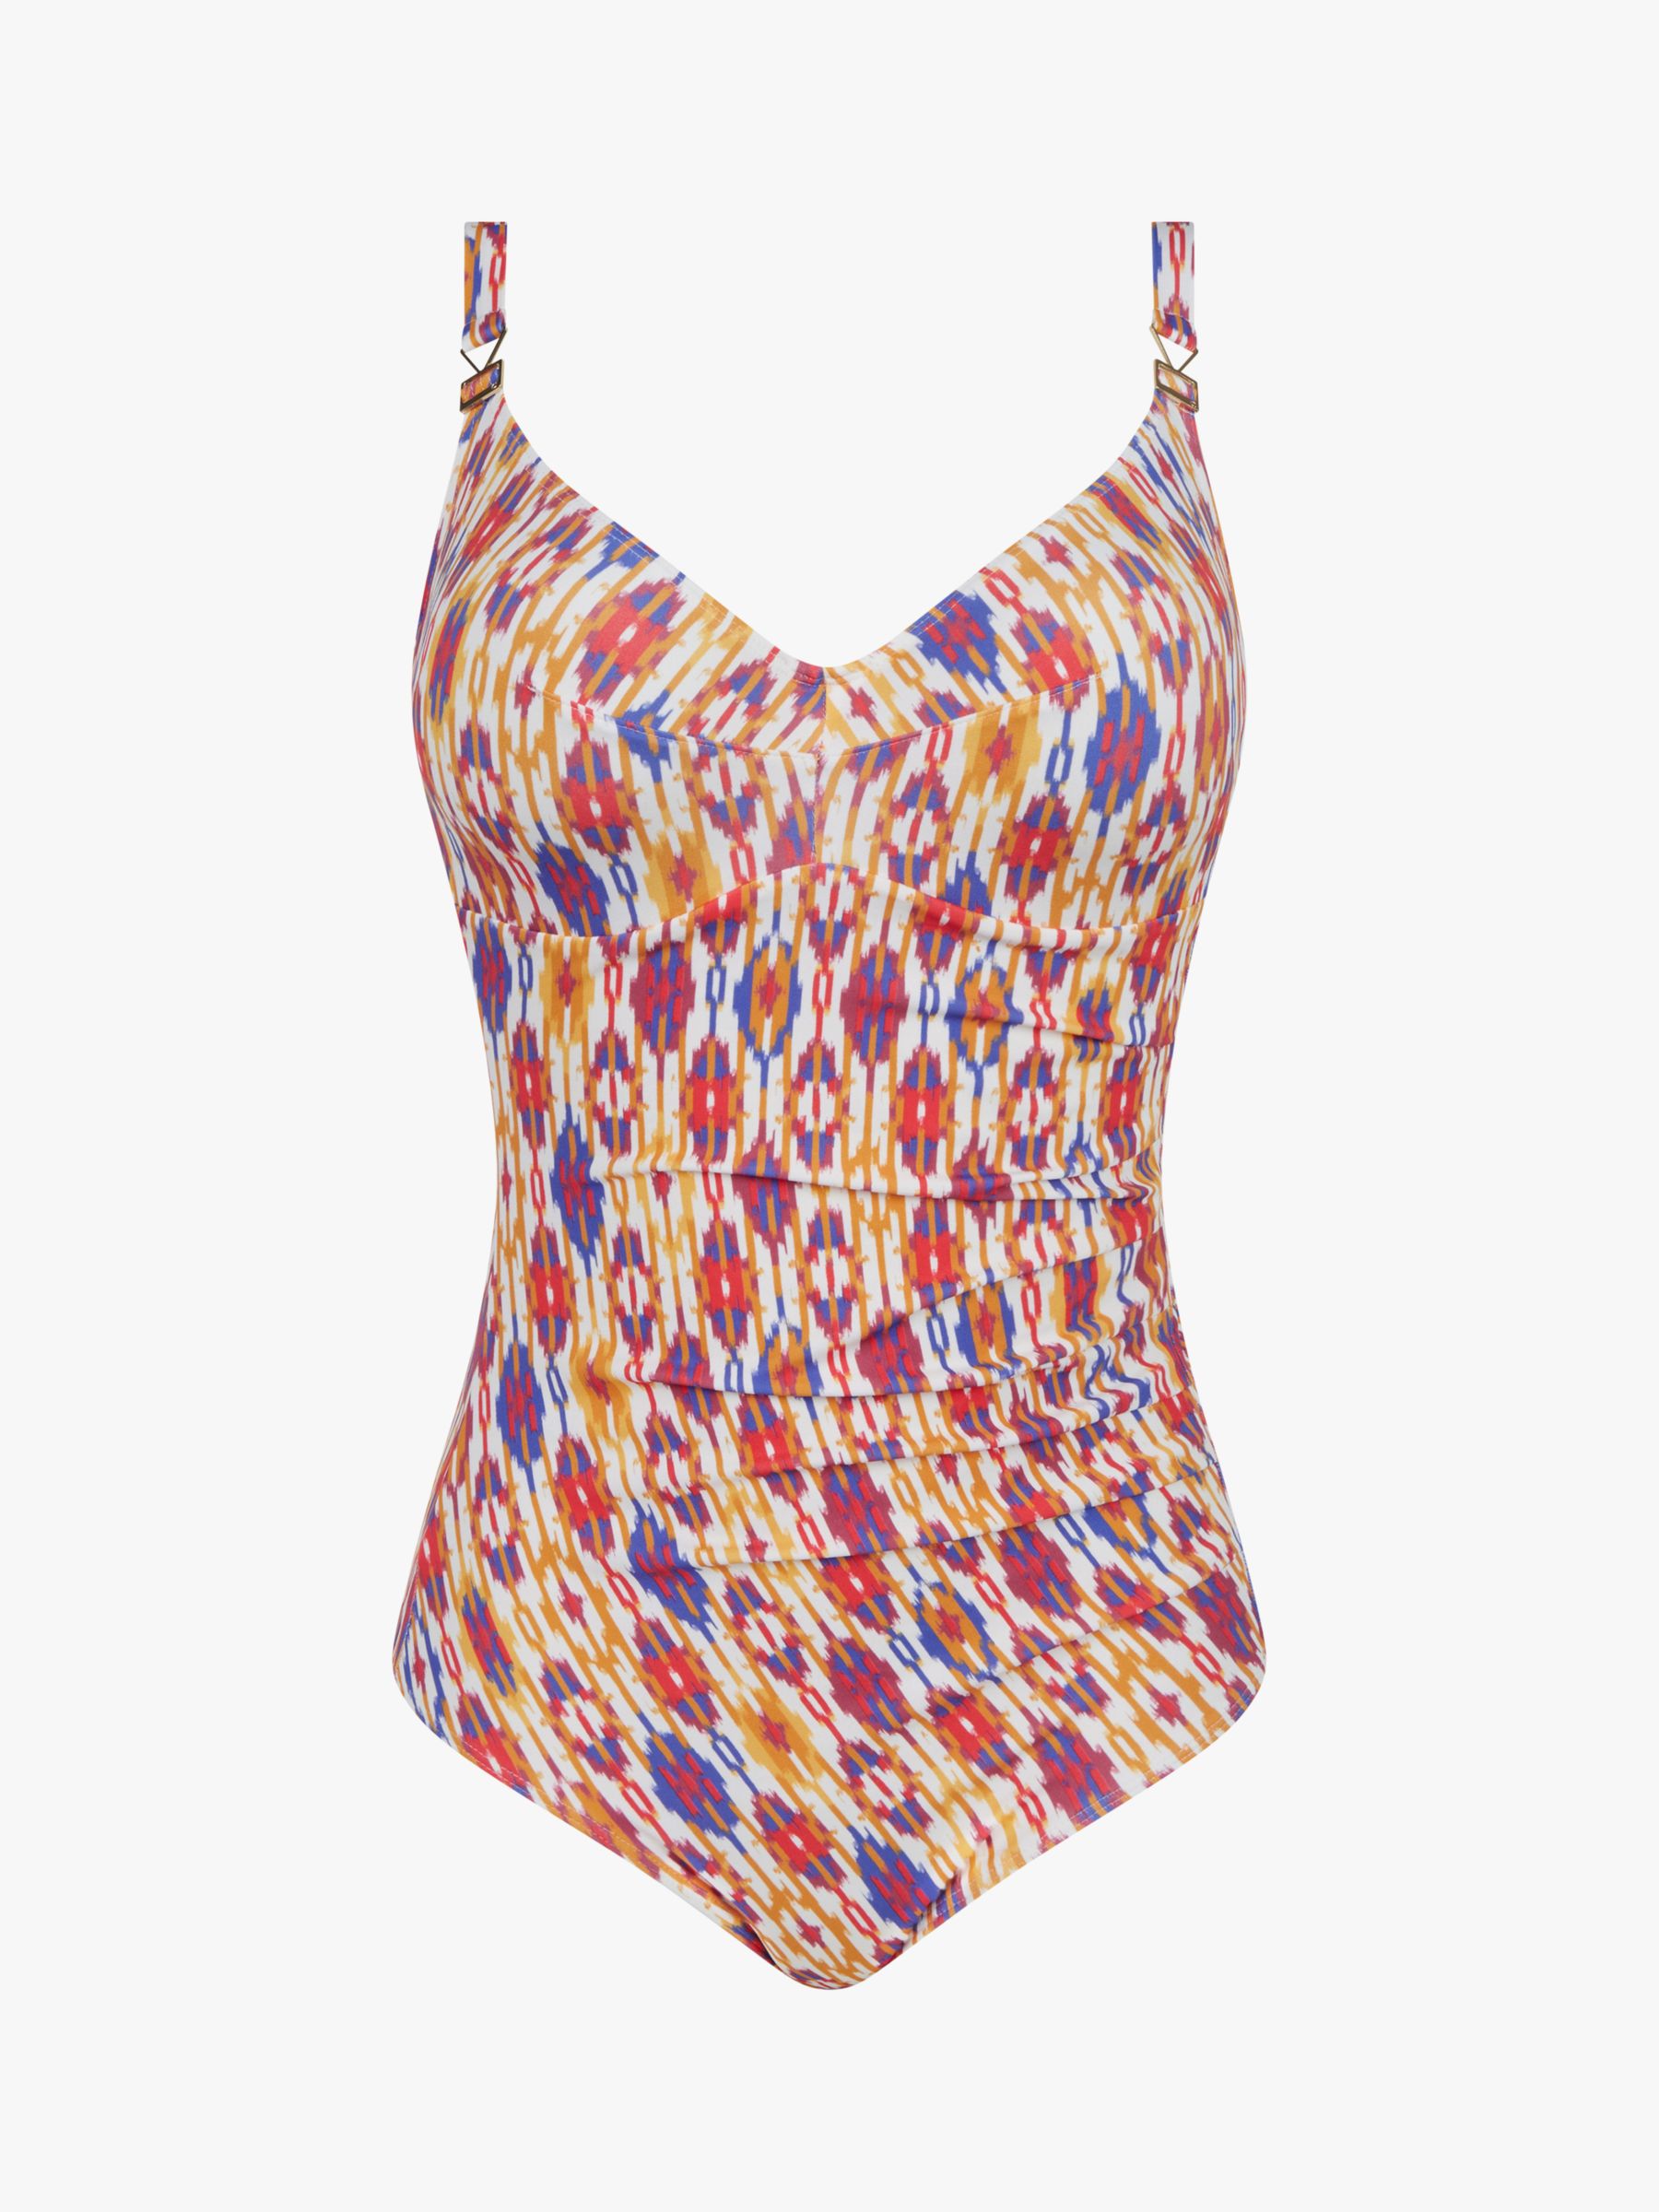 Chantelle Devotion Ikat Print Underwired Swimsuit, Red/Multi, 38DD